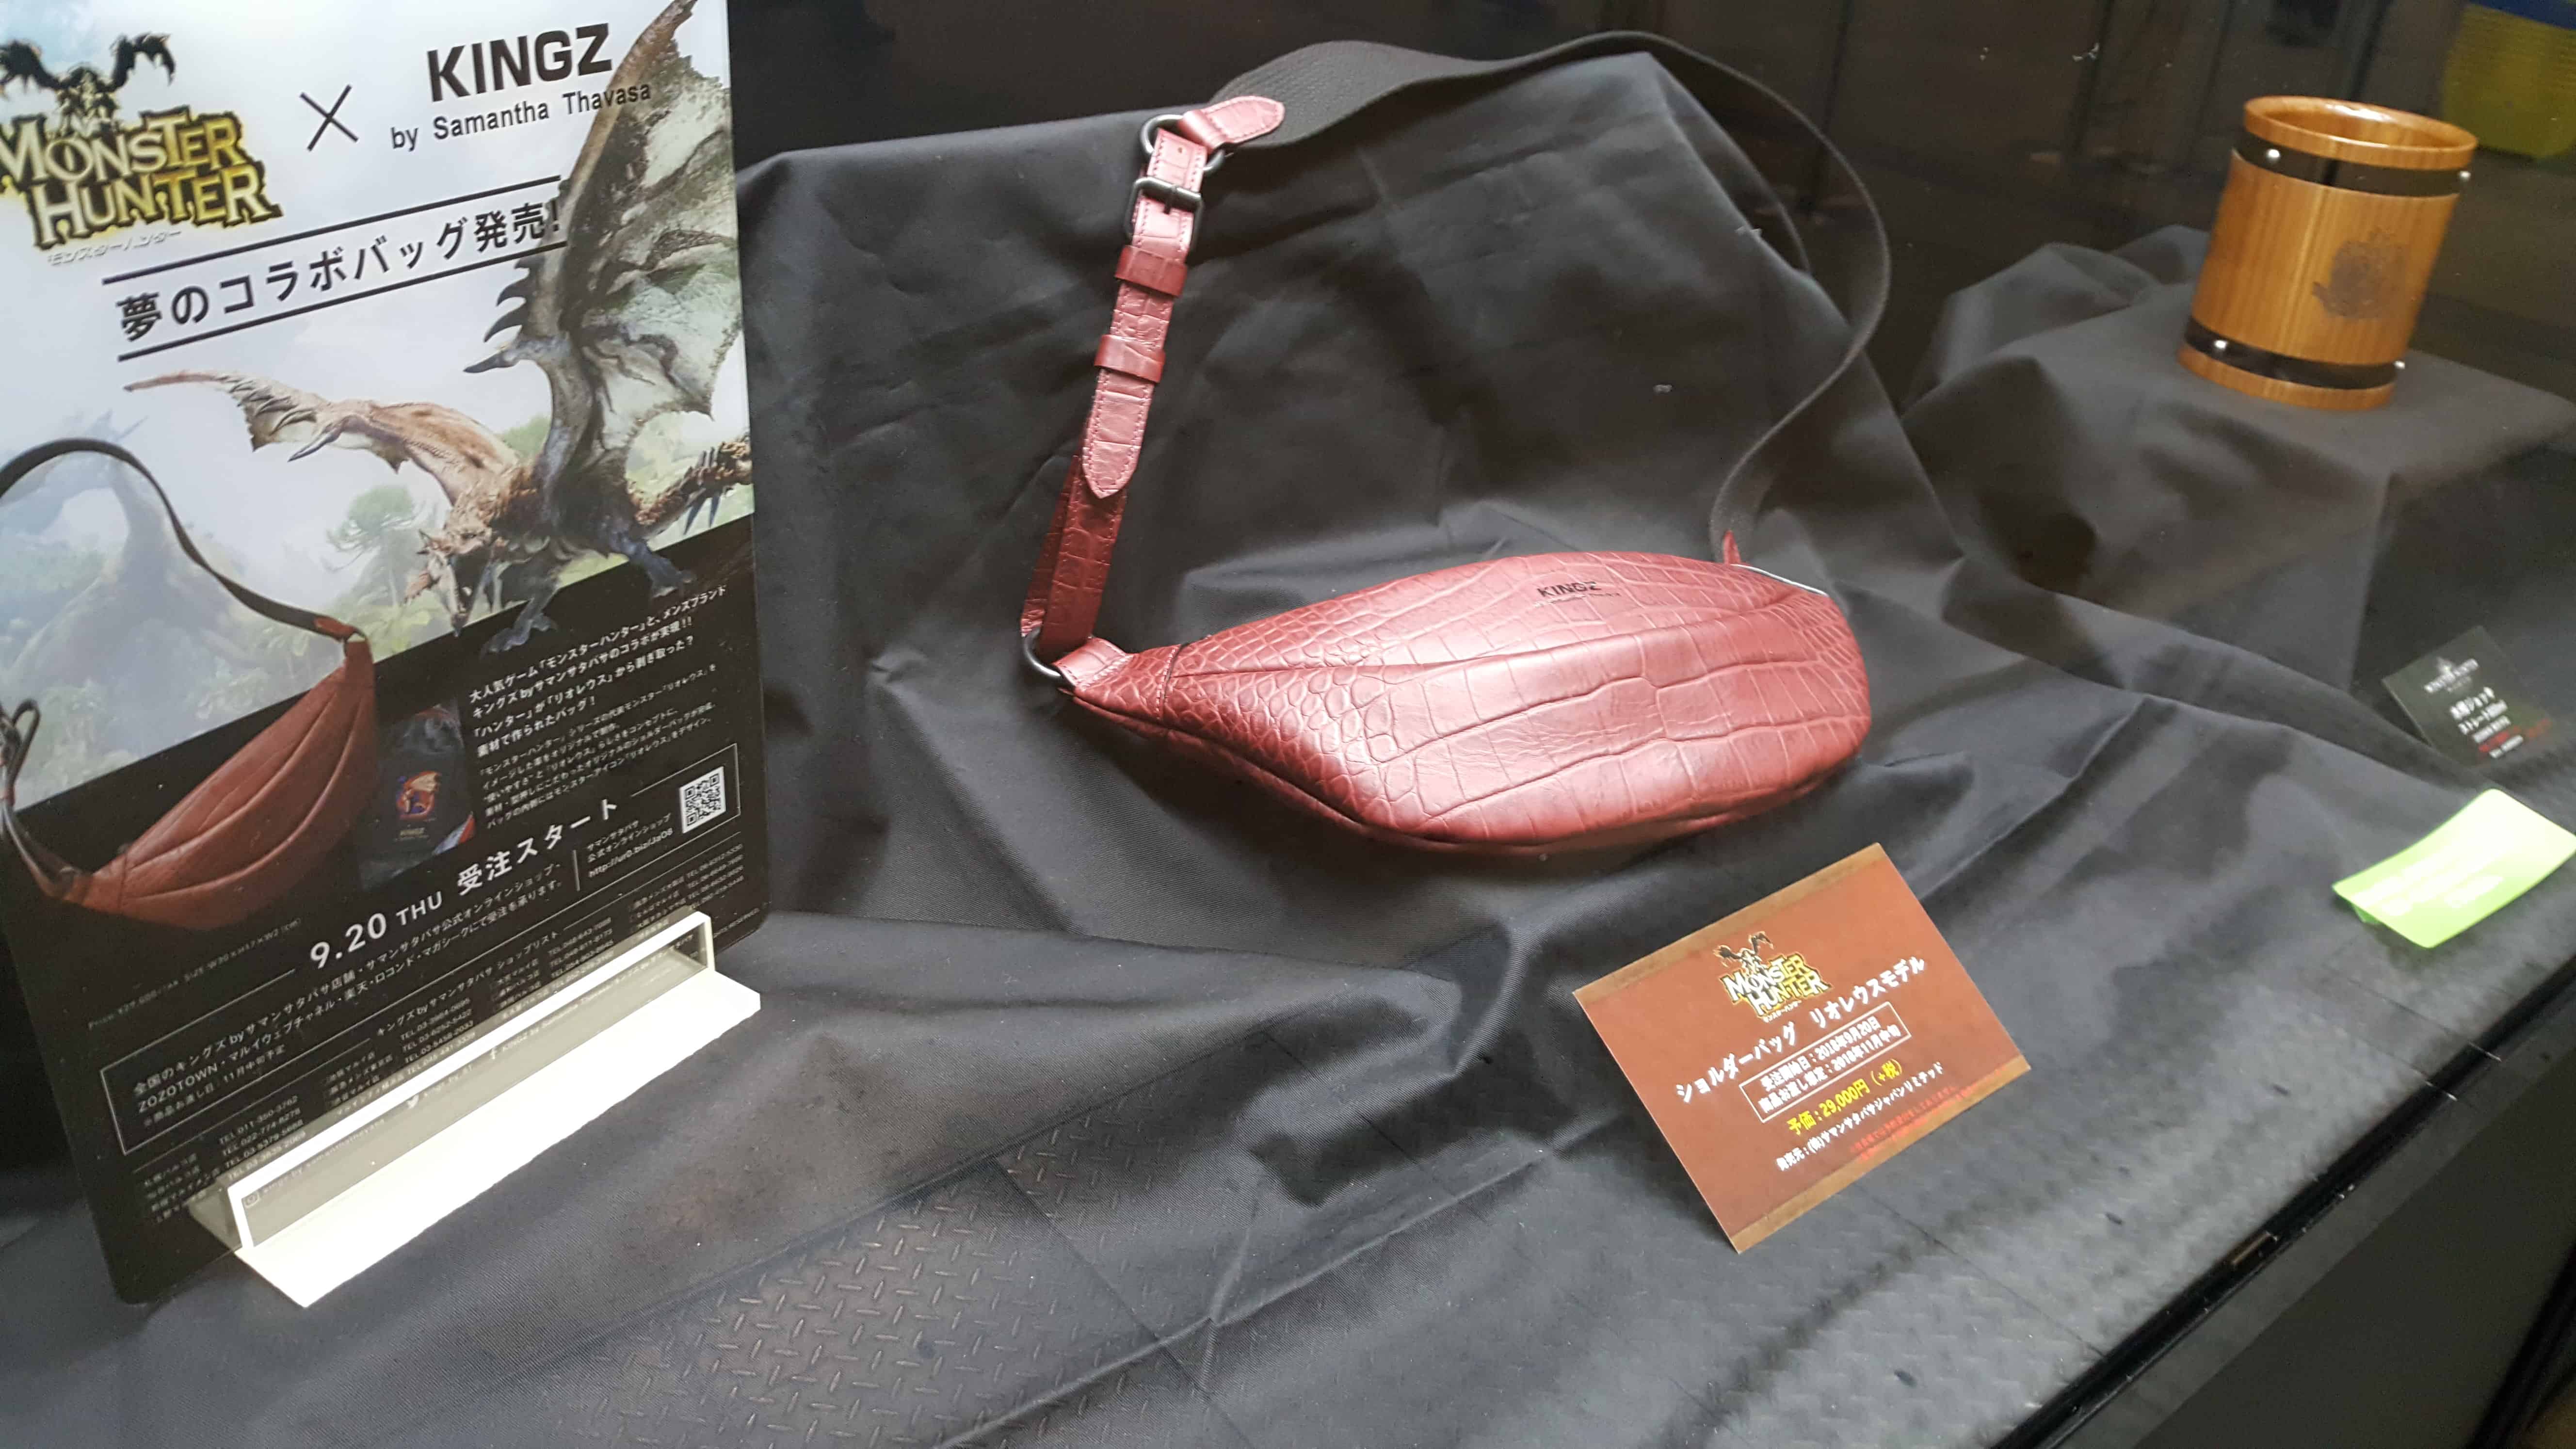 Monster Hunter Bag At Tgs 2018